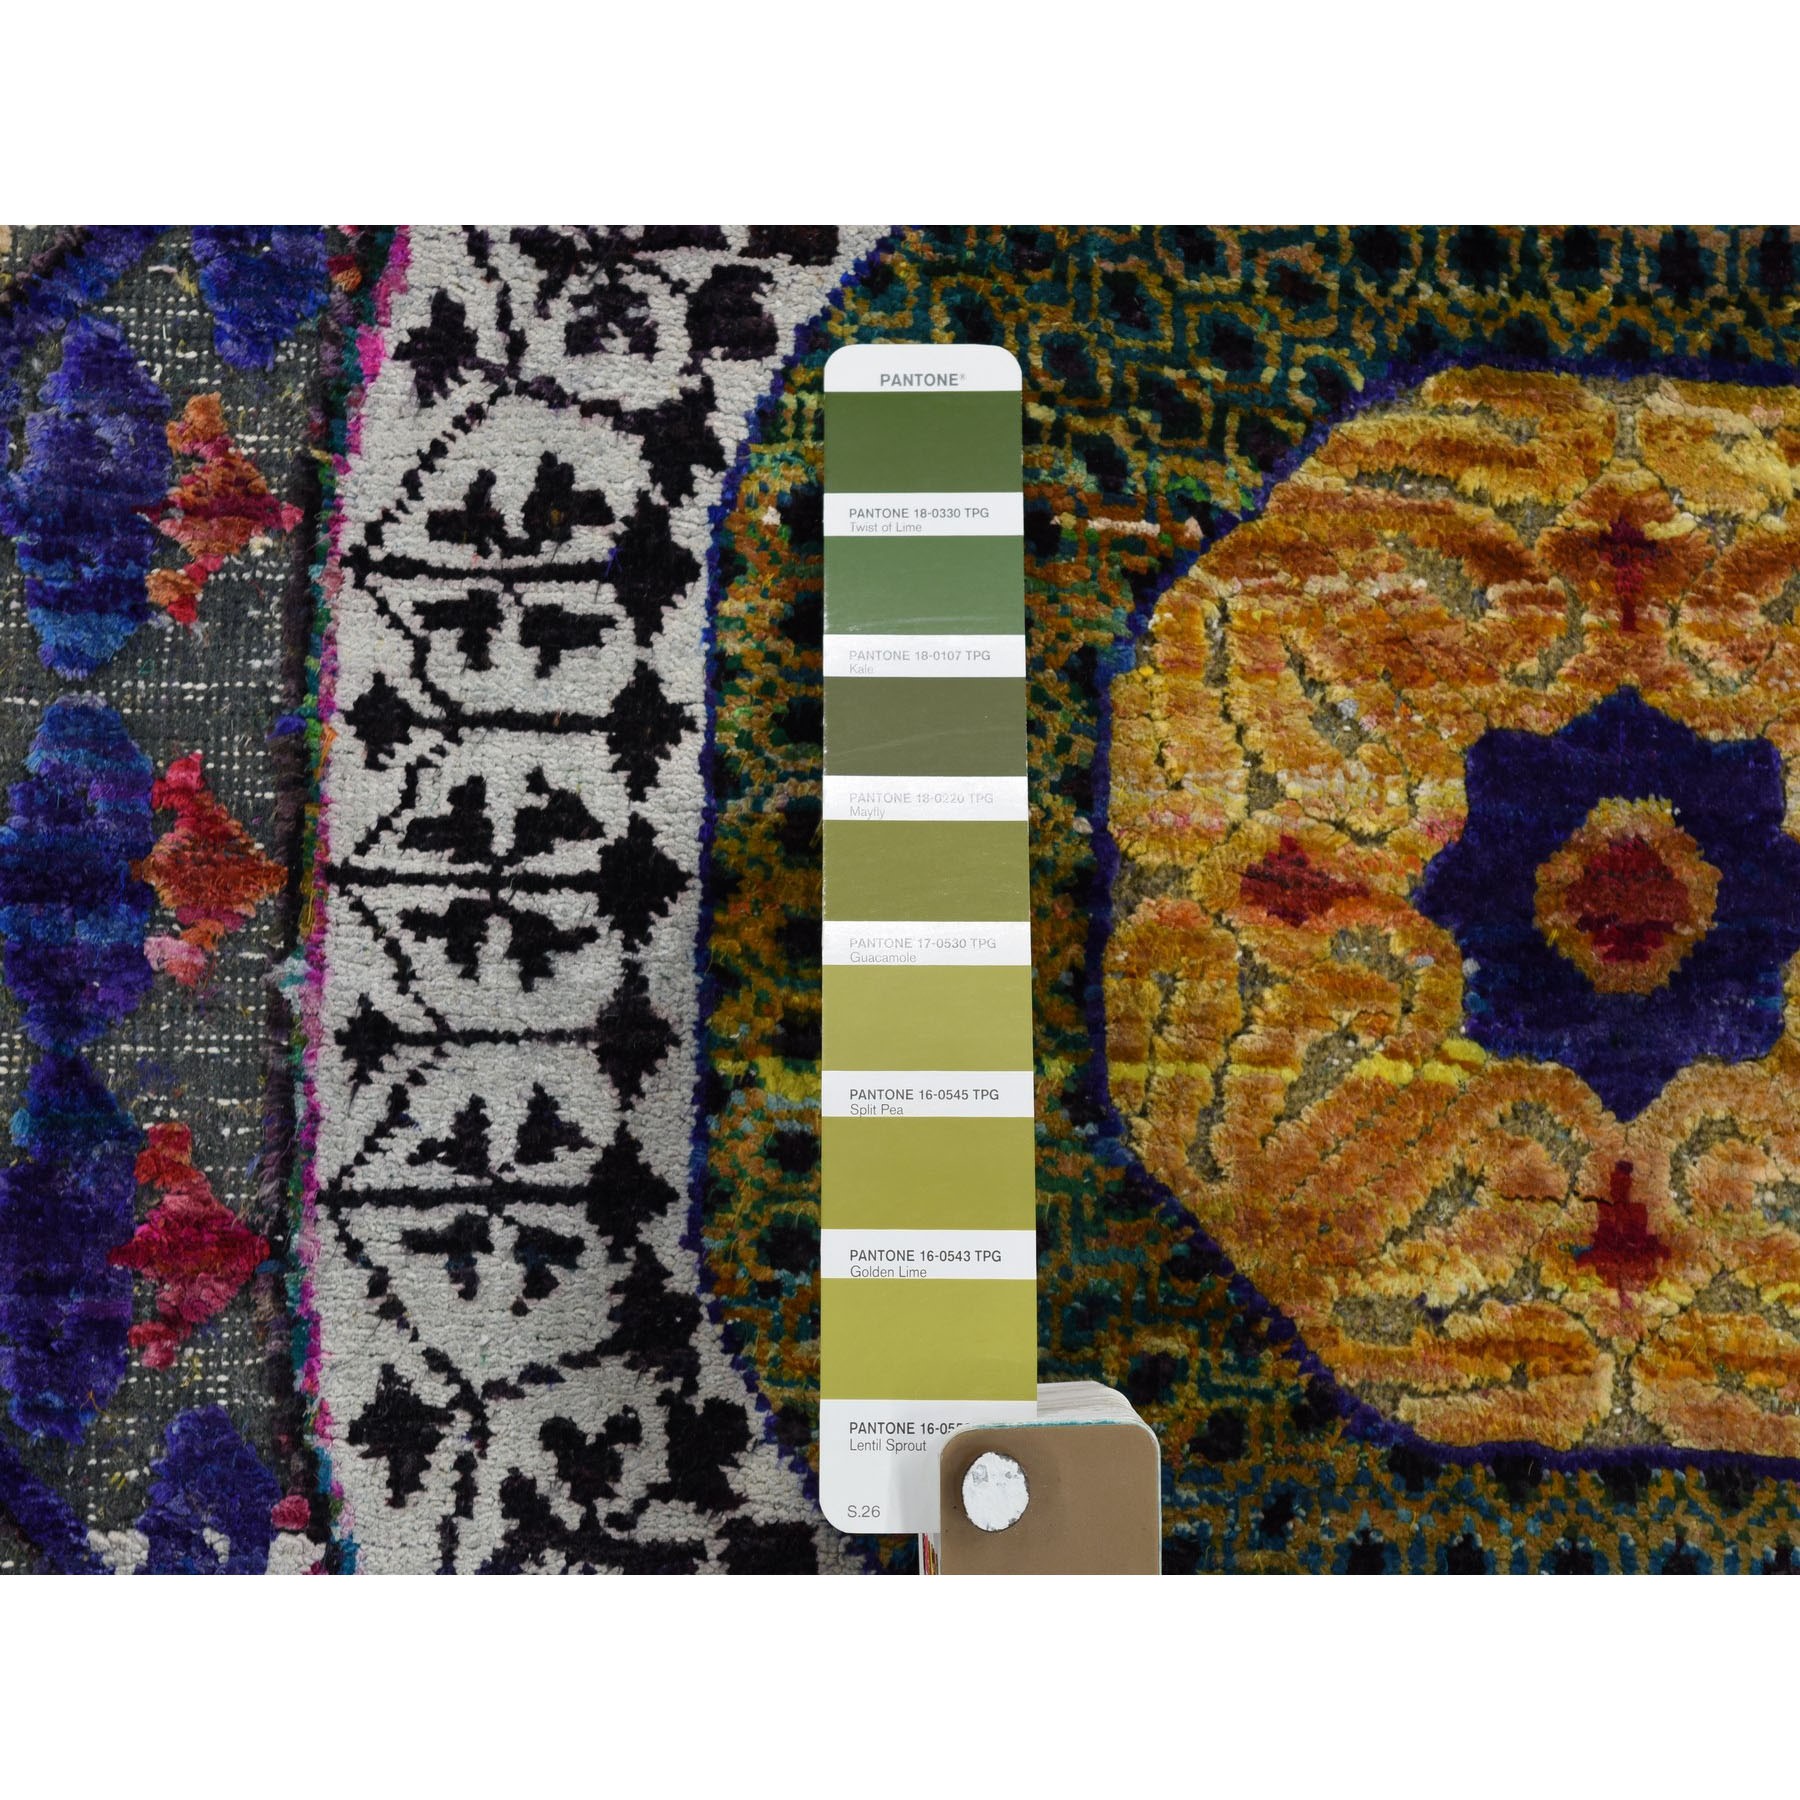 8'1"x10'6" Colorful Mamluk Design Sari Silk With Textured Wool Hand Woven Oriental Rug 